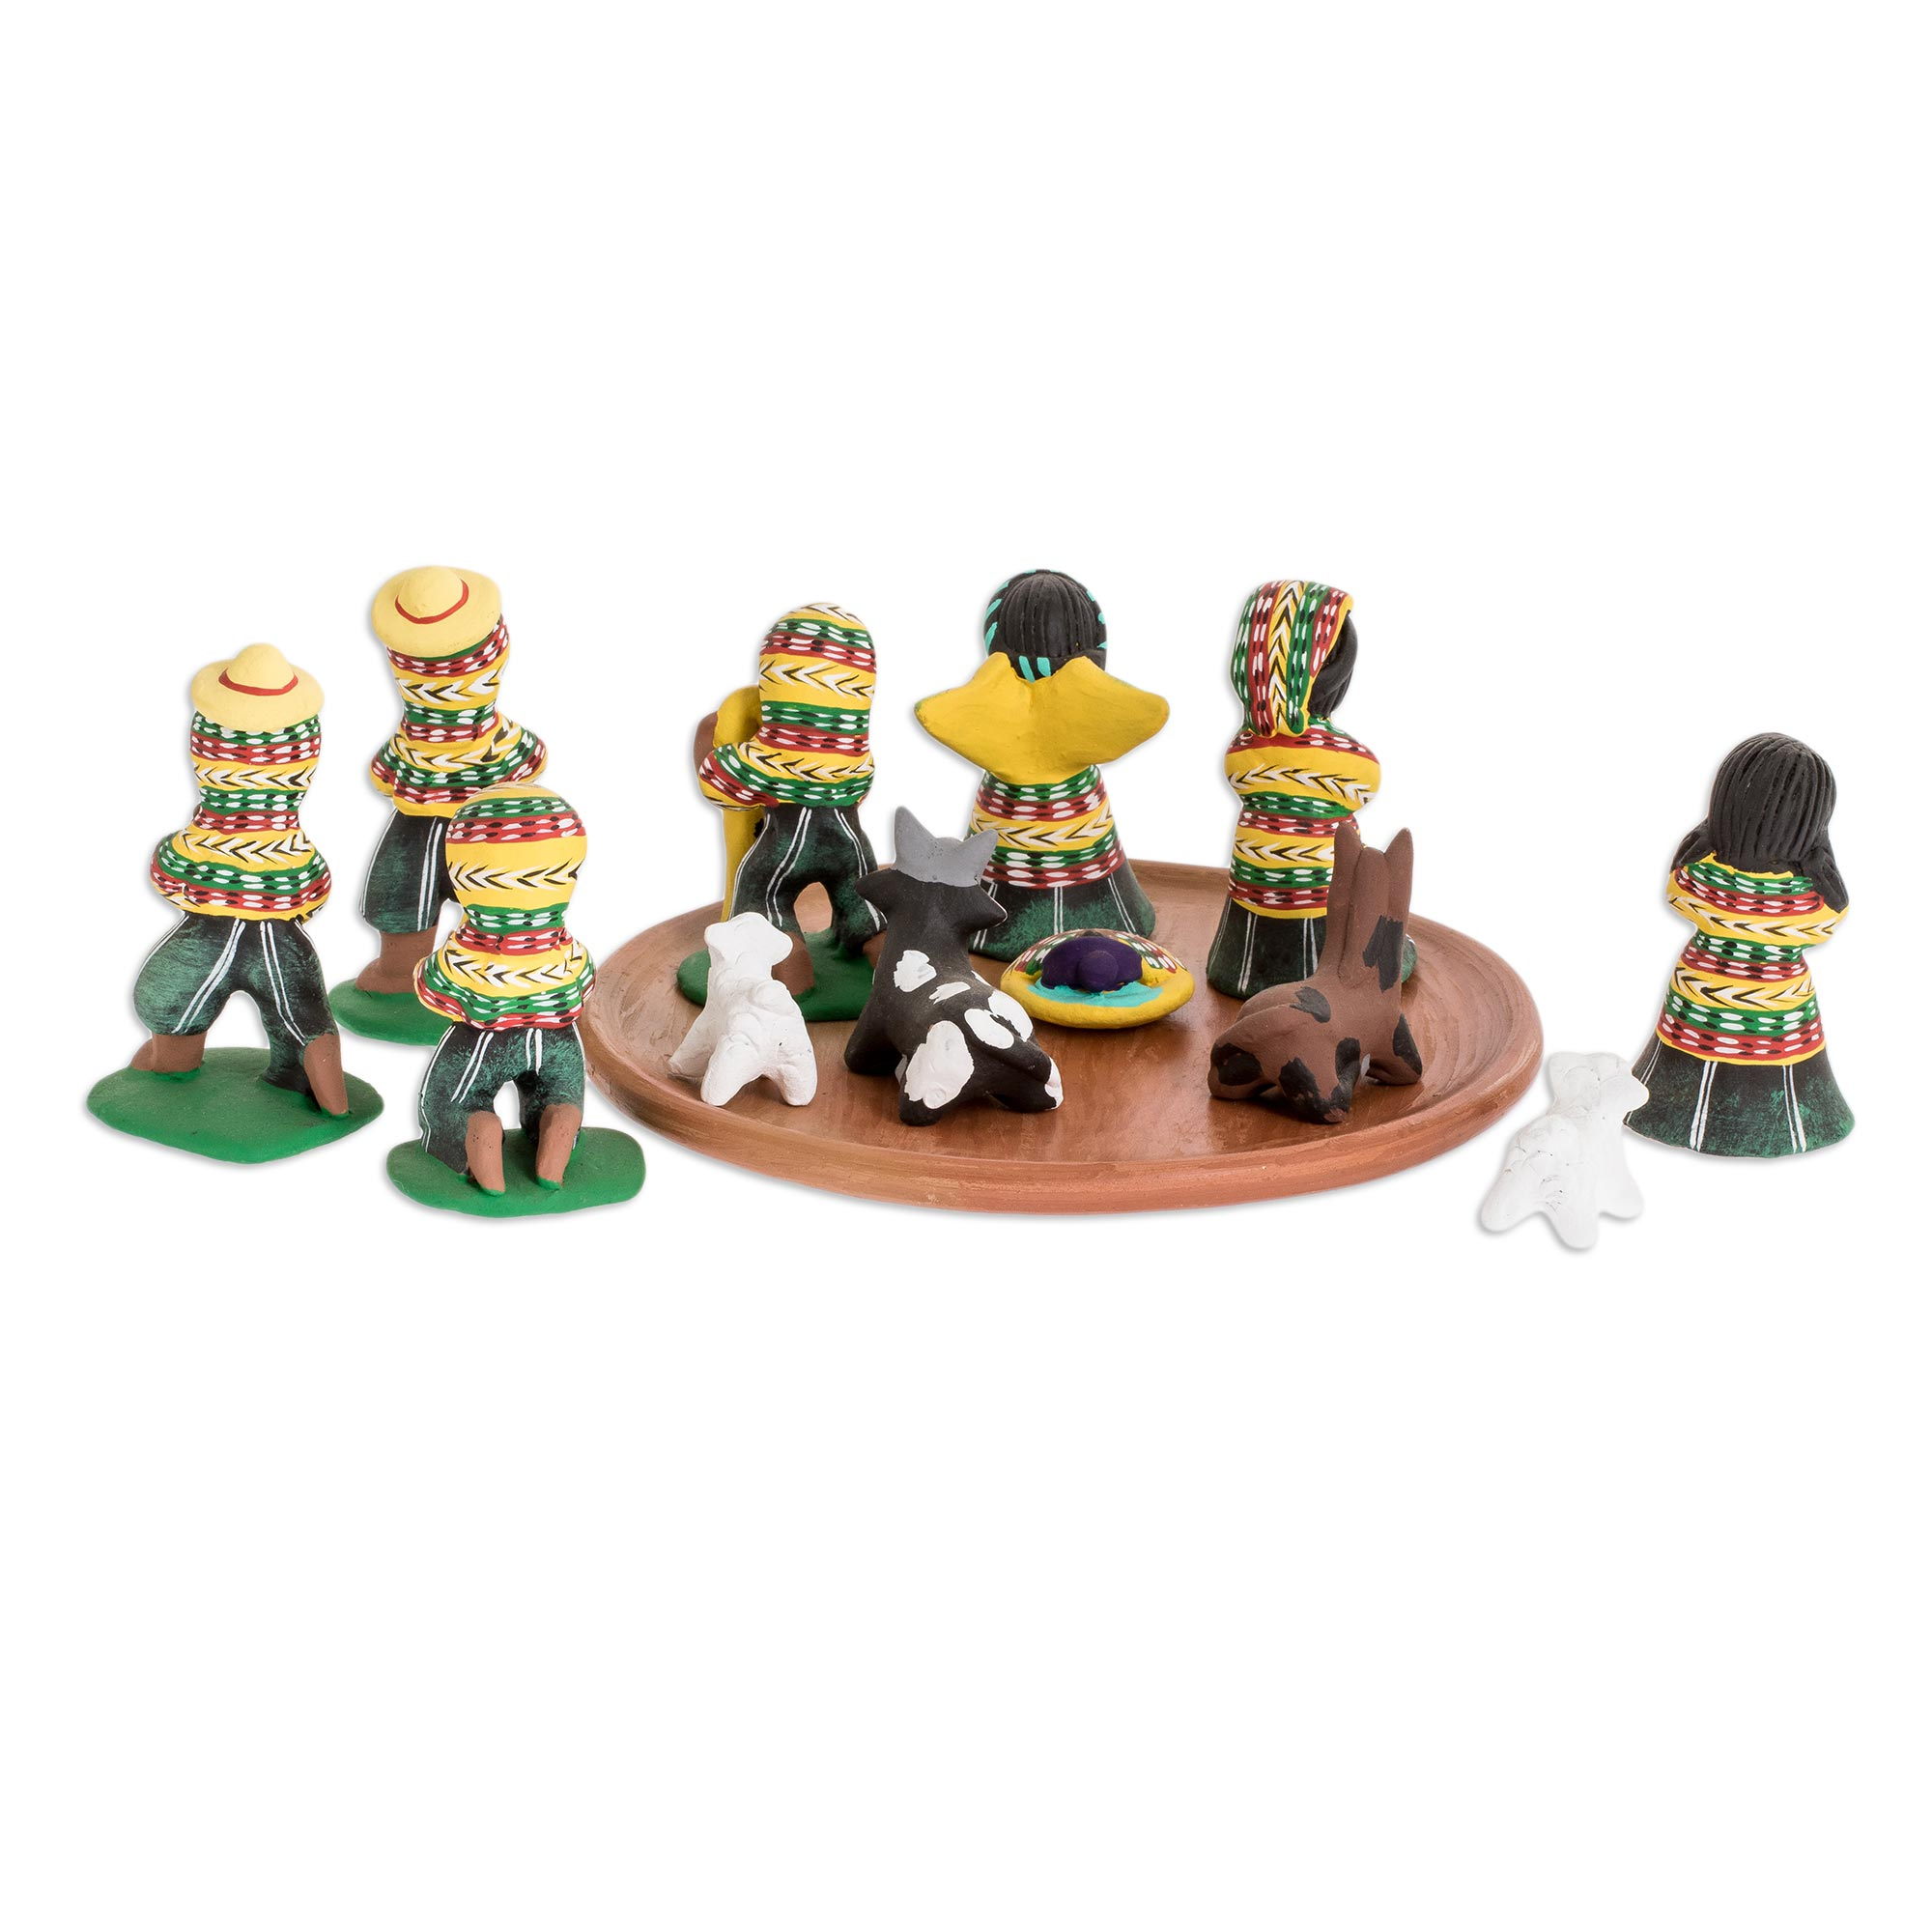 UNICEF Market Ceramic Nativity Scene Sculpture (Set of